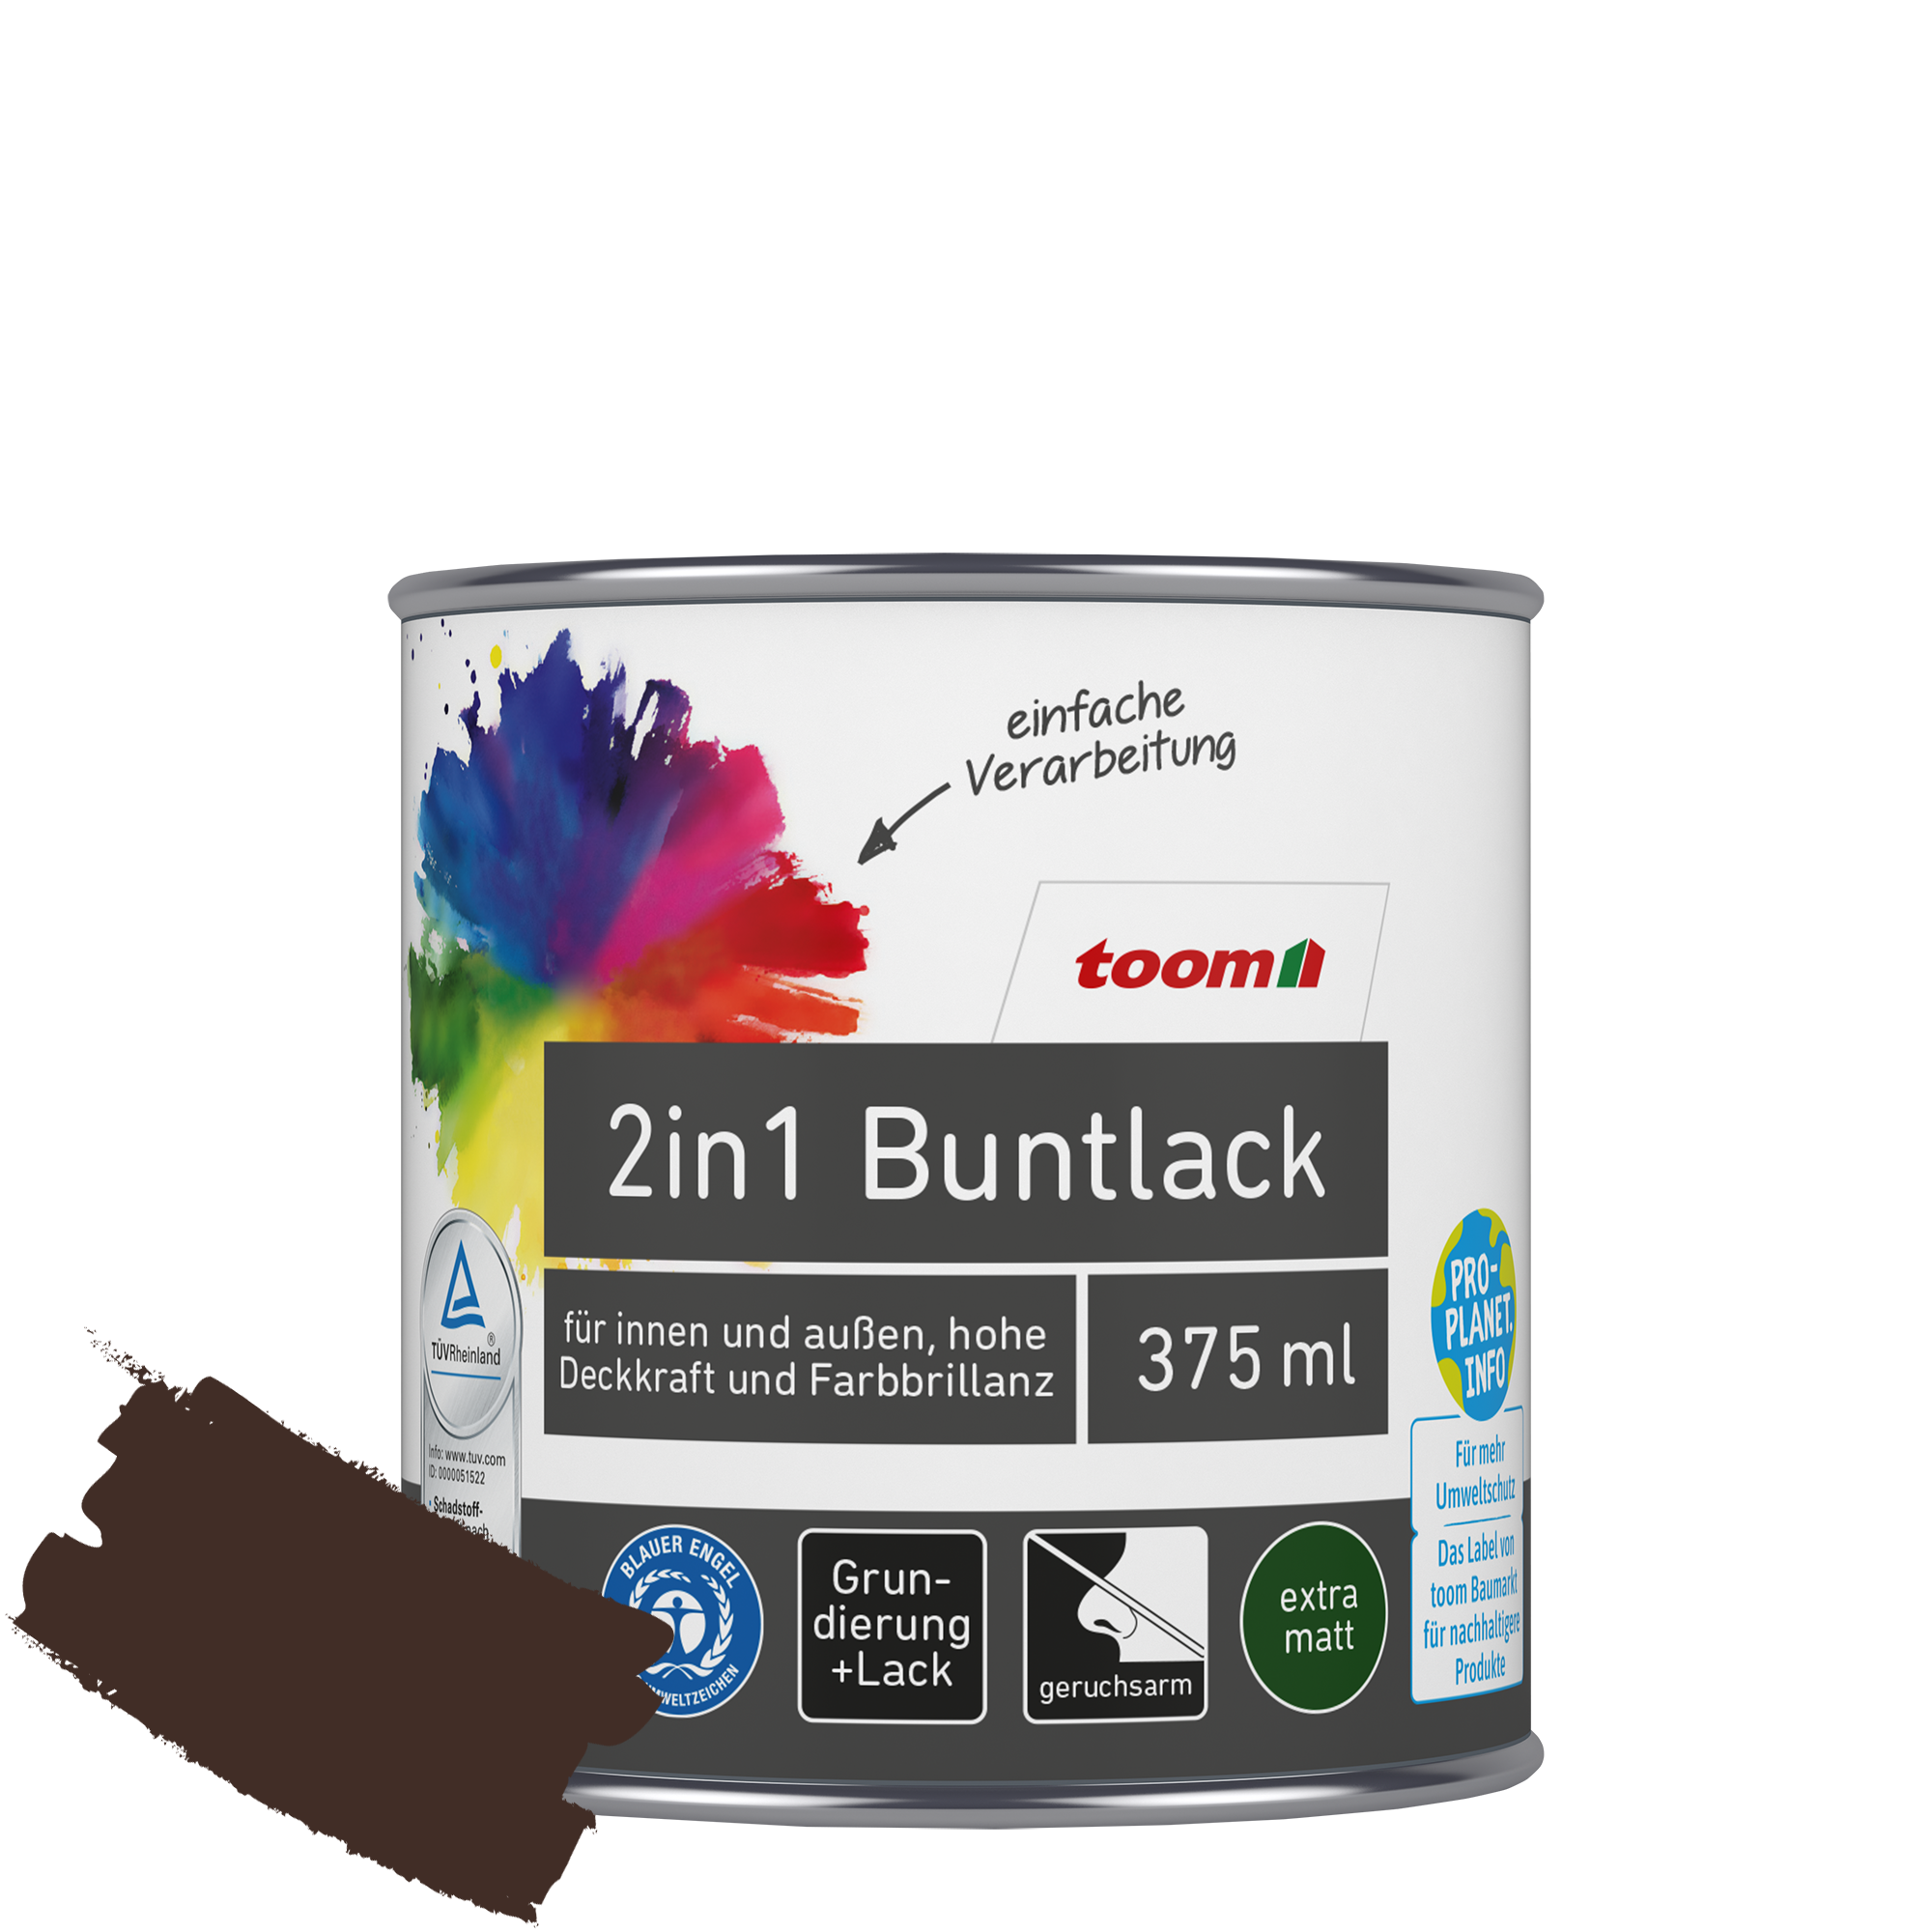 2in1 Buntlack 'Edelbraun' schokobraun matt 375 ml + product picture